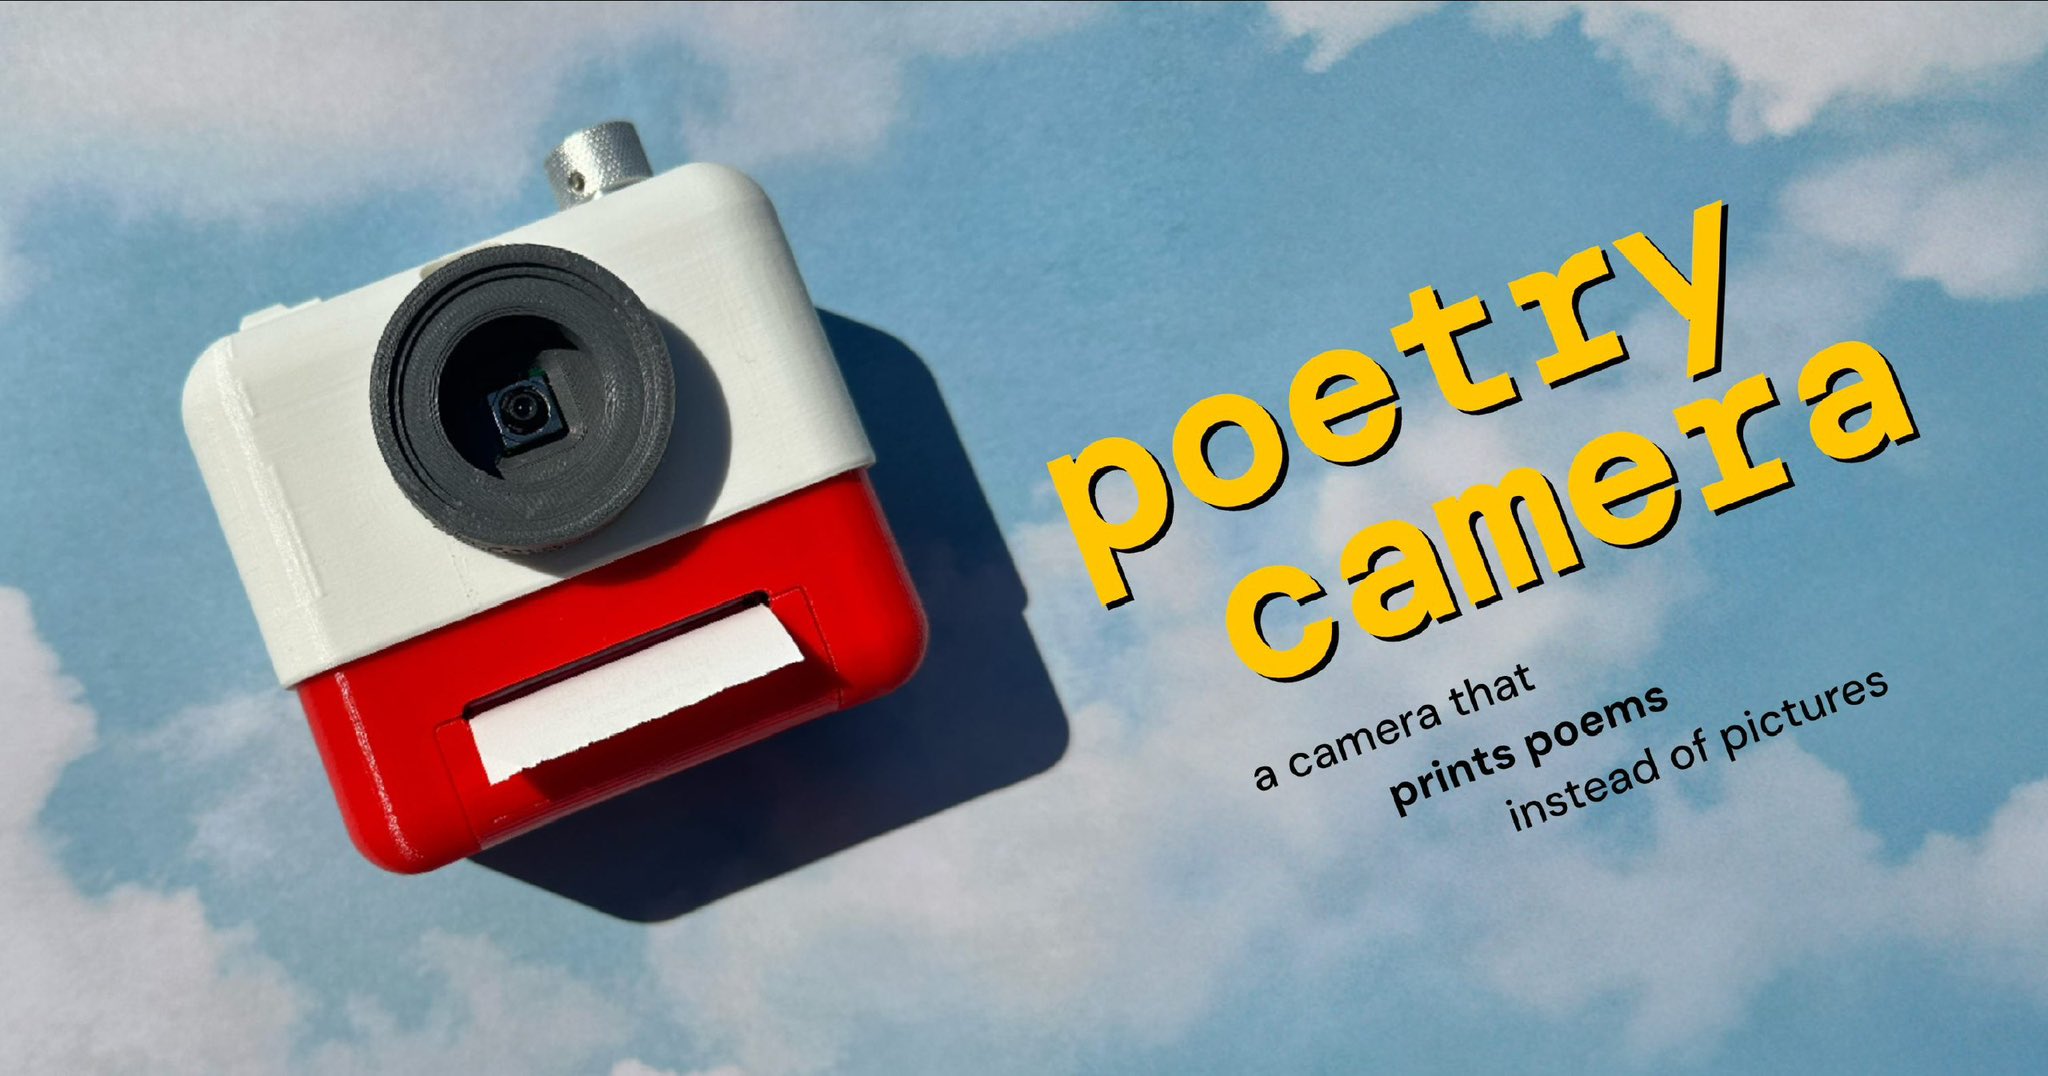 Poetry camera